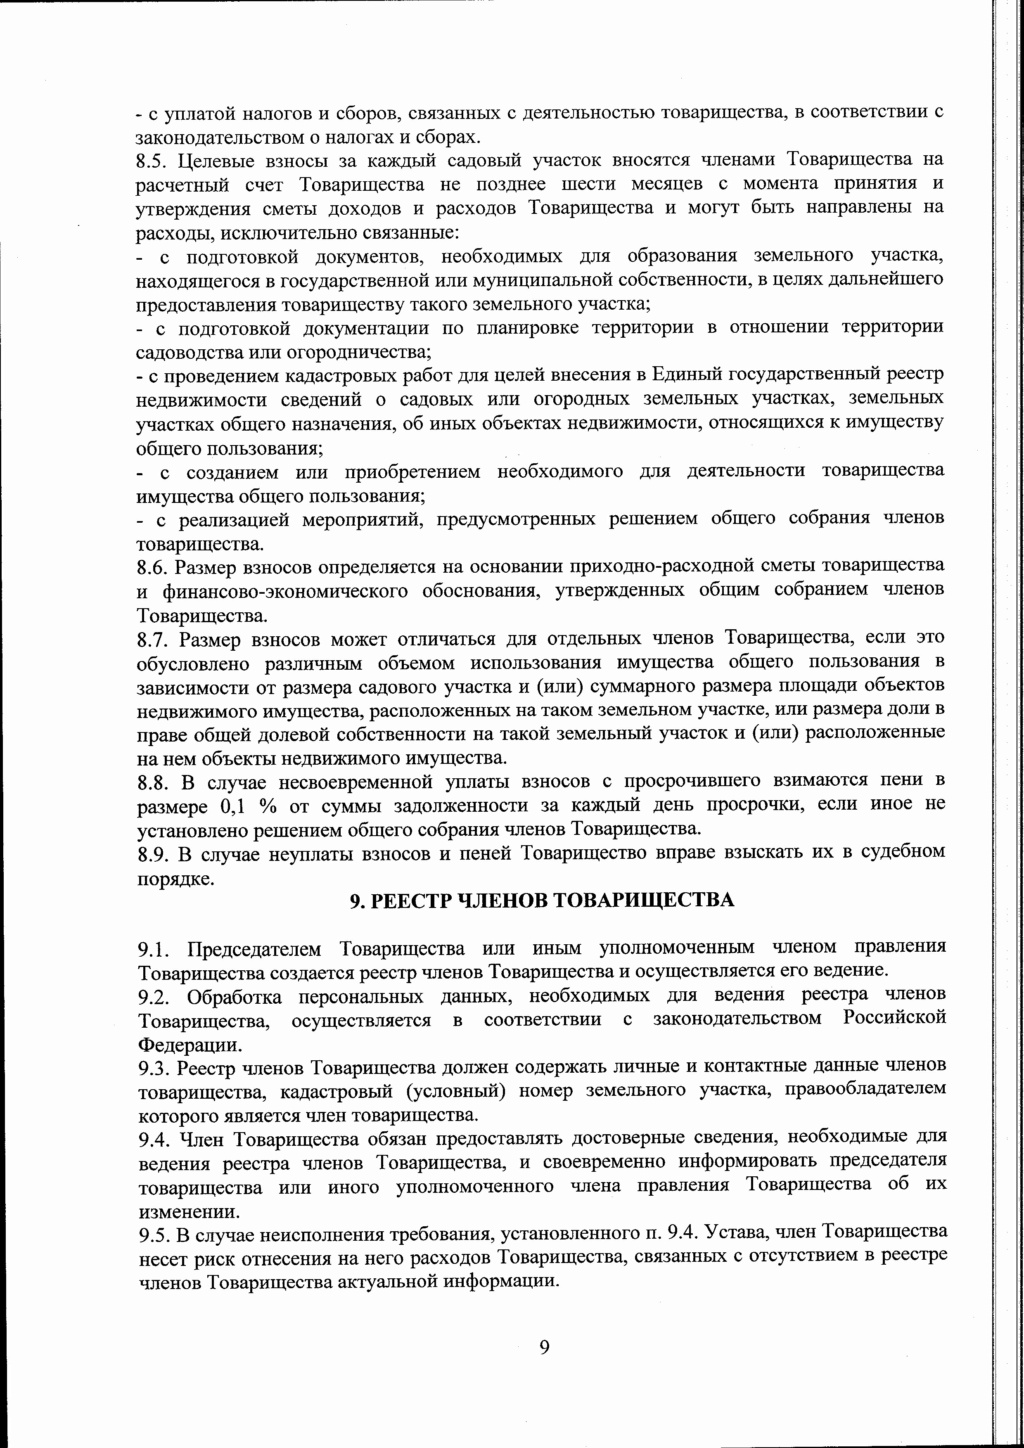 устав - Устав ТСН СНТ "ЛУЧ" 2021 год Upload18